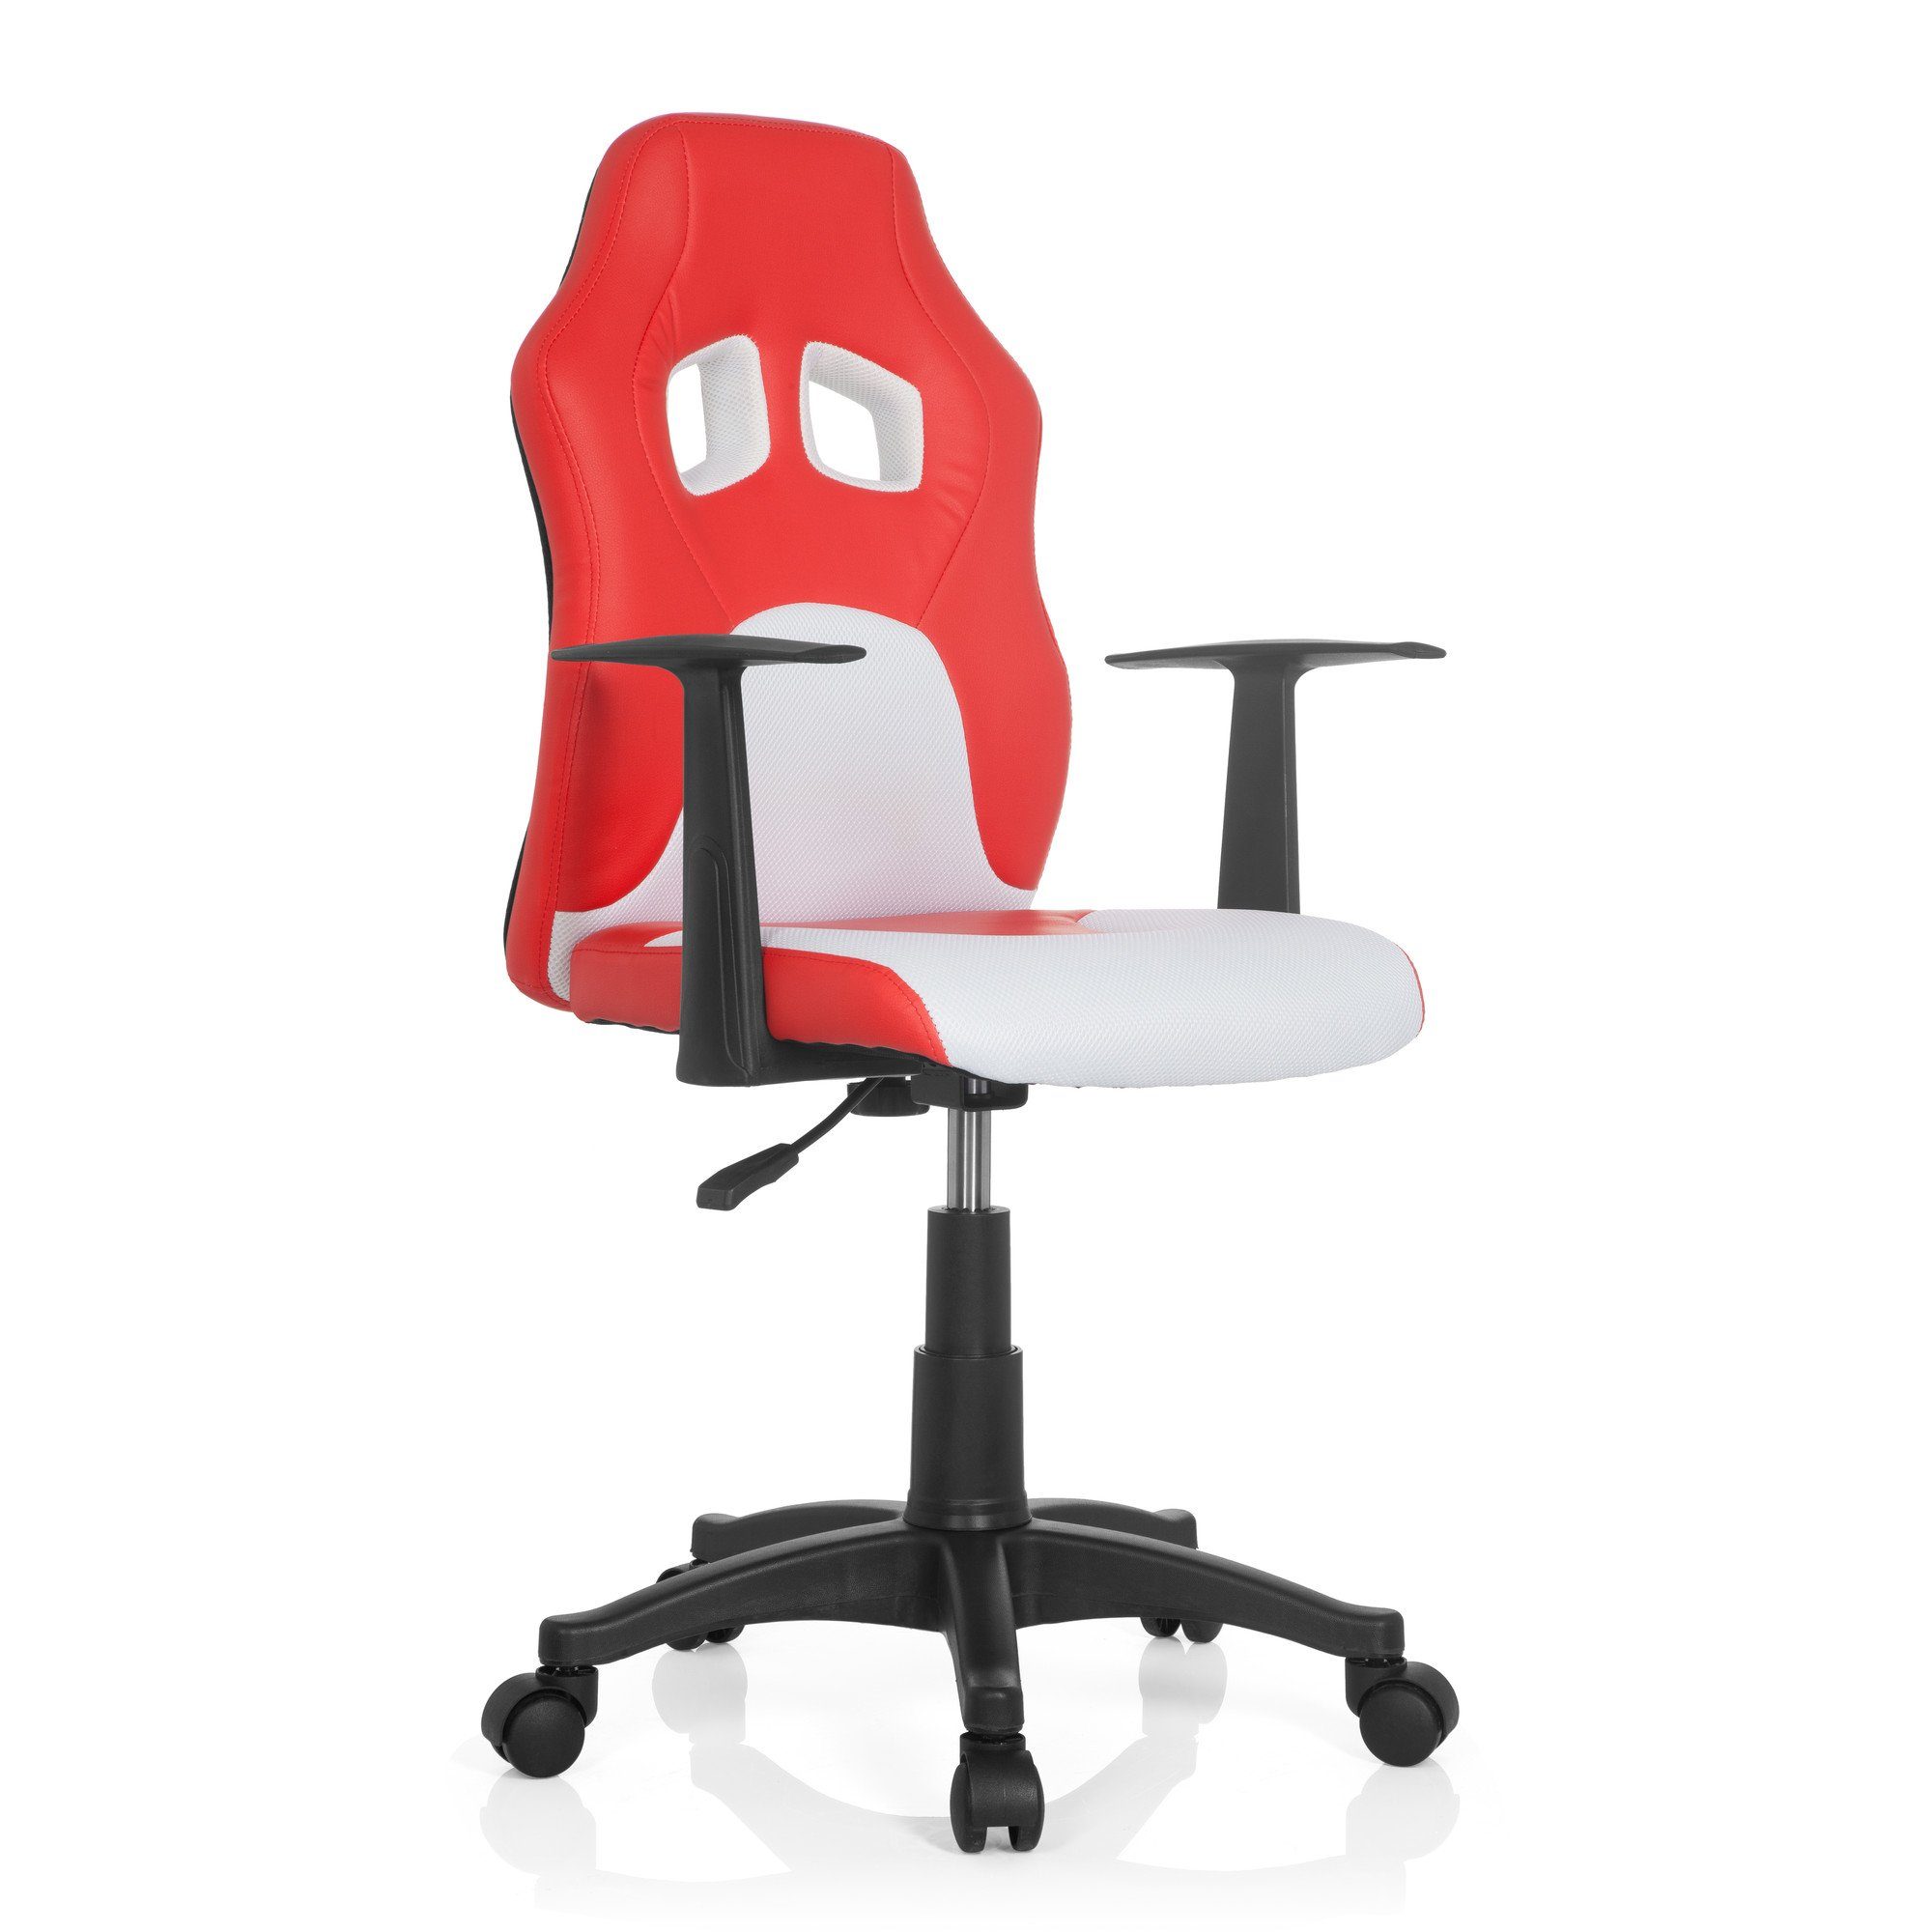 Drehstuhl OFFICE AL GAME Rot Weiß TEEN ergonomisch Kunstleder, Kinderdrehstuhl hjh /